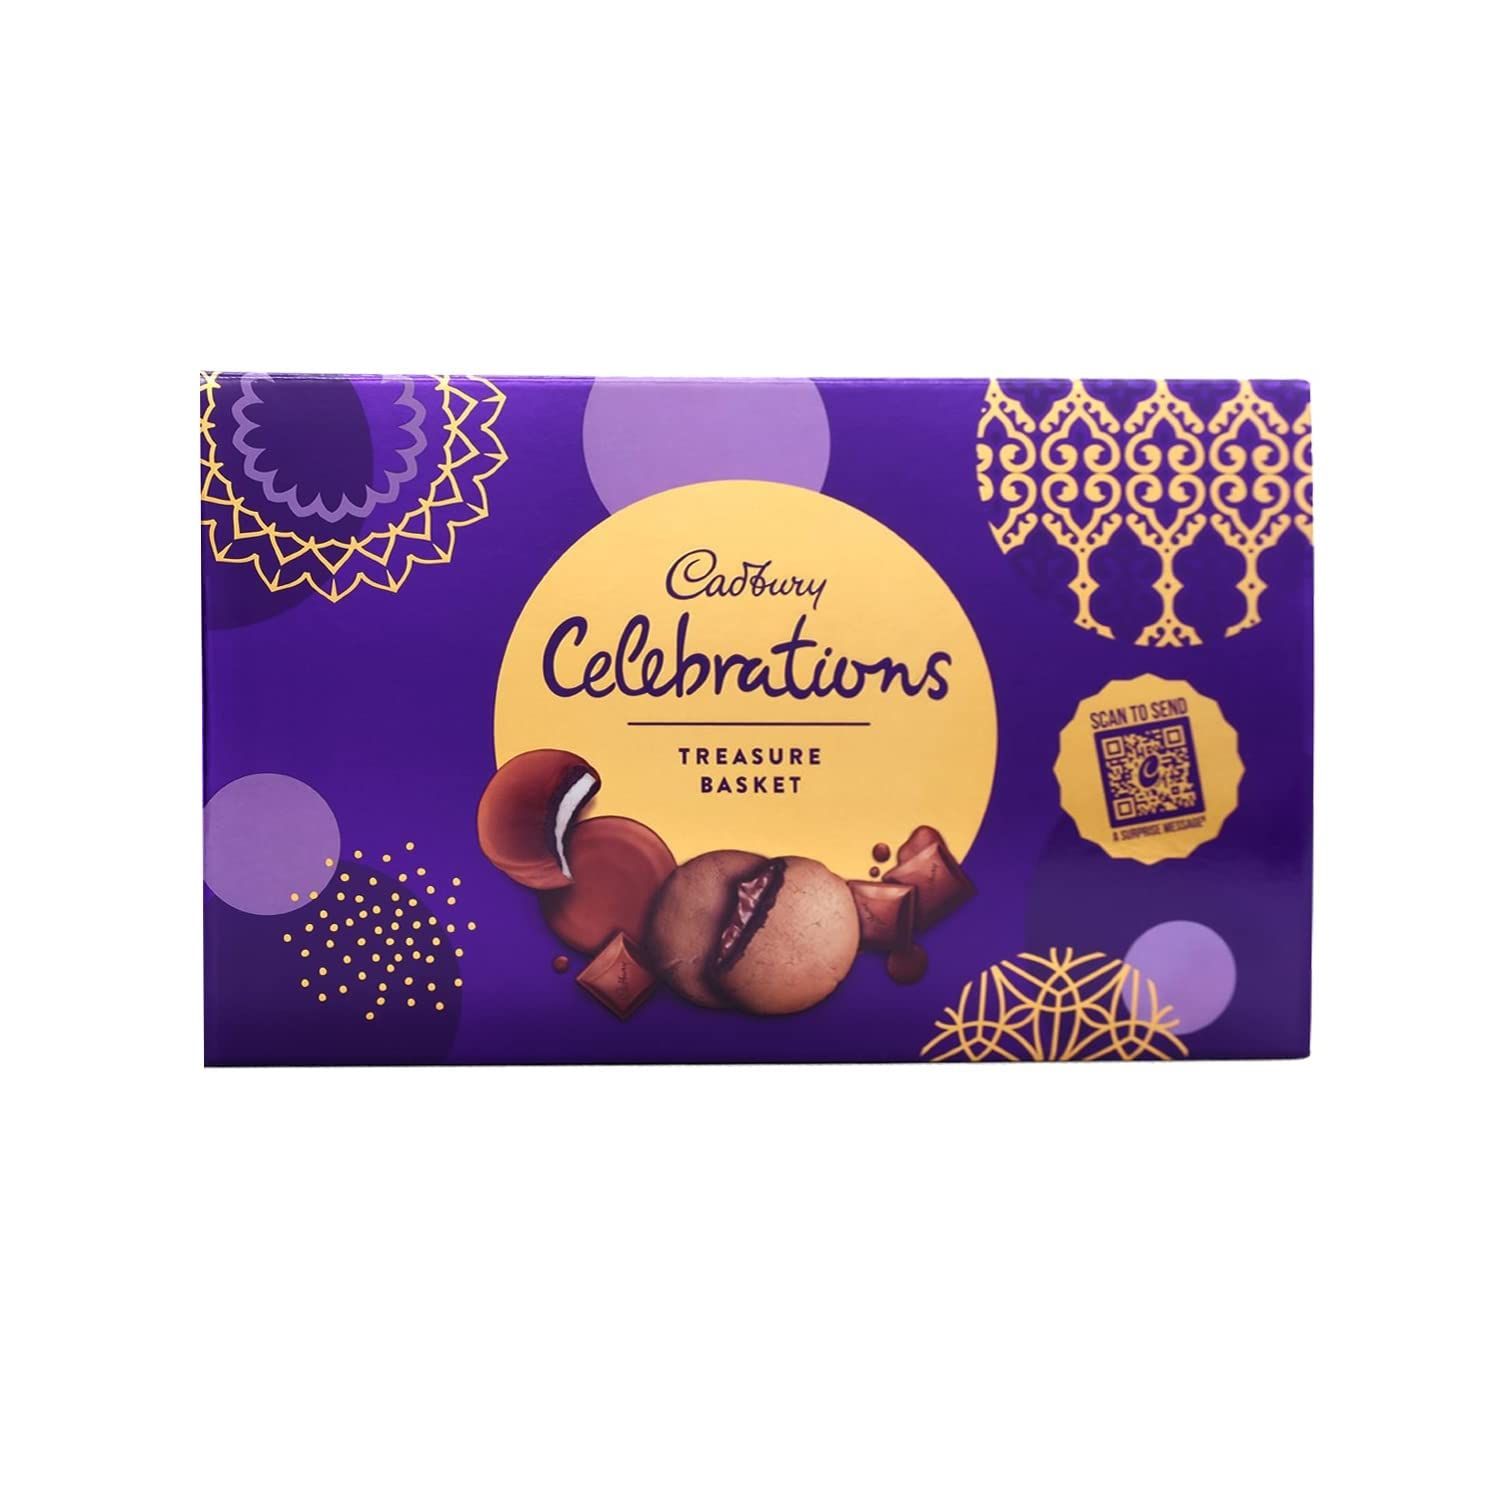 Cadbury Celebrations Treasure Basket Image